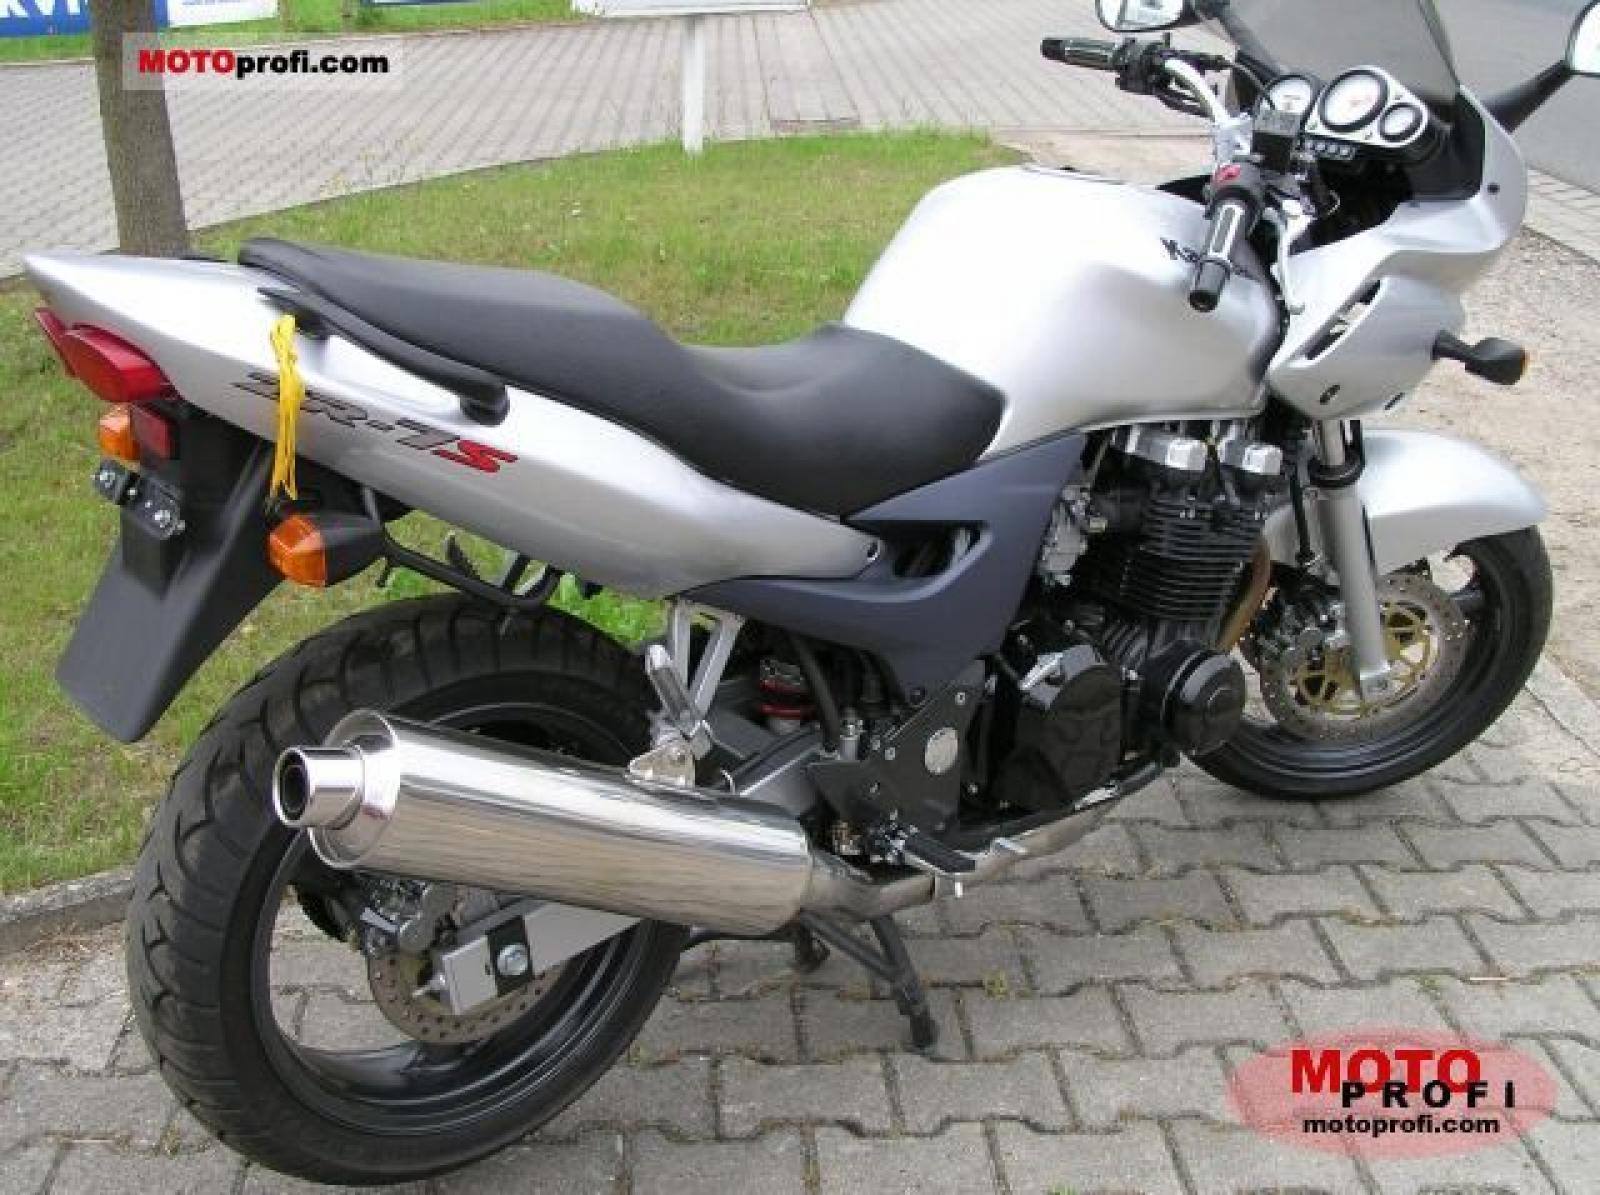 KAWASAKI ZR-7 S 2002 750 cm3 | moto roadster | 35 000 km 